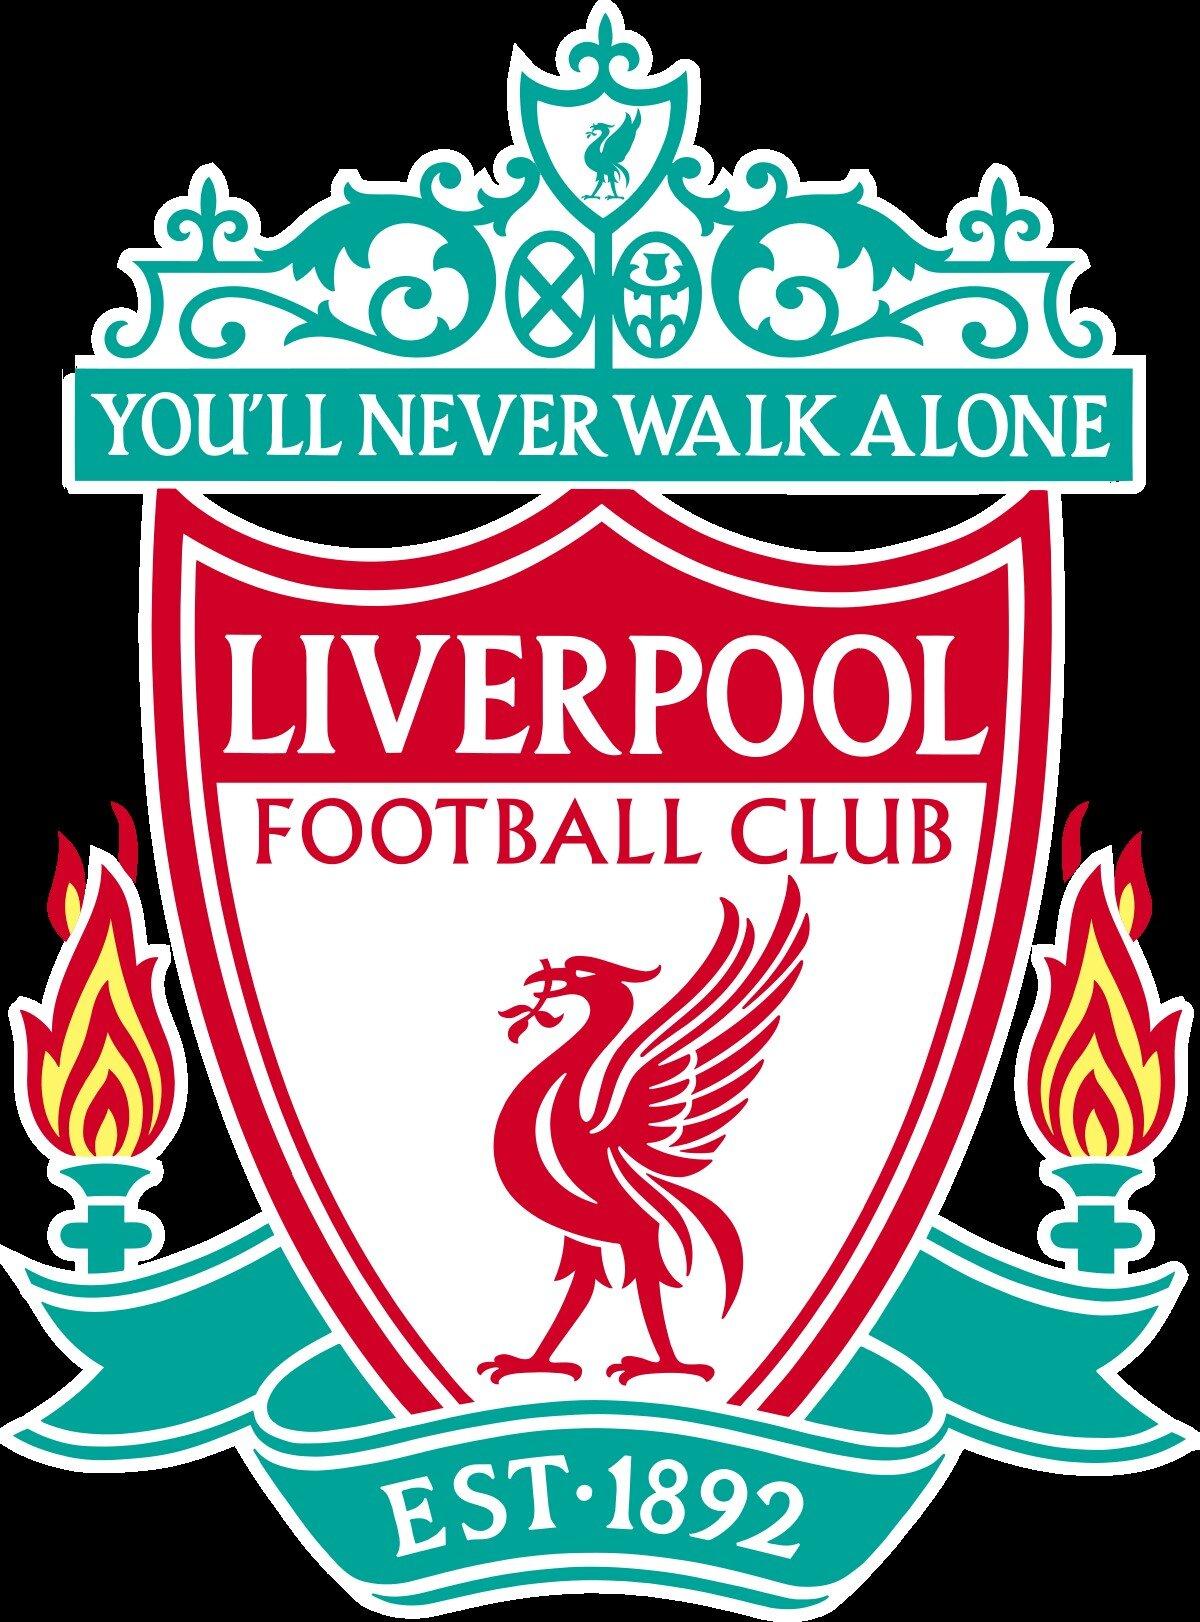 Câu lạc bộ Liverpool (Ảnh: Internet)